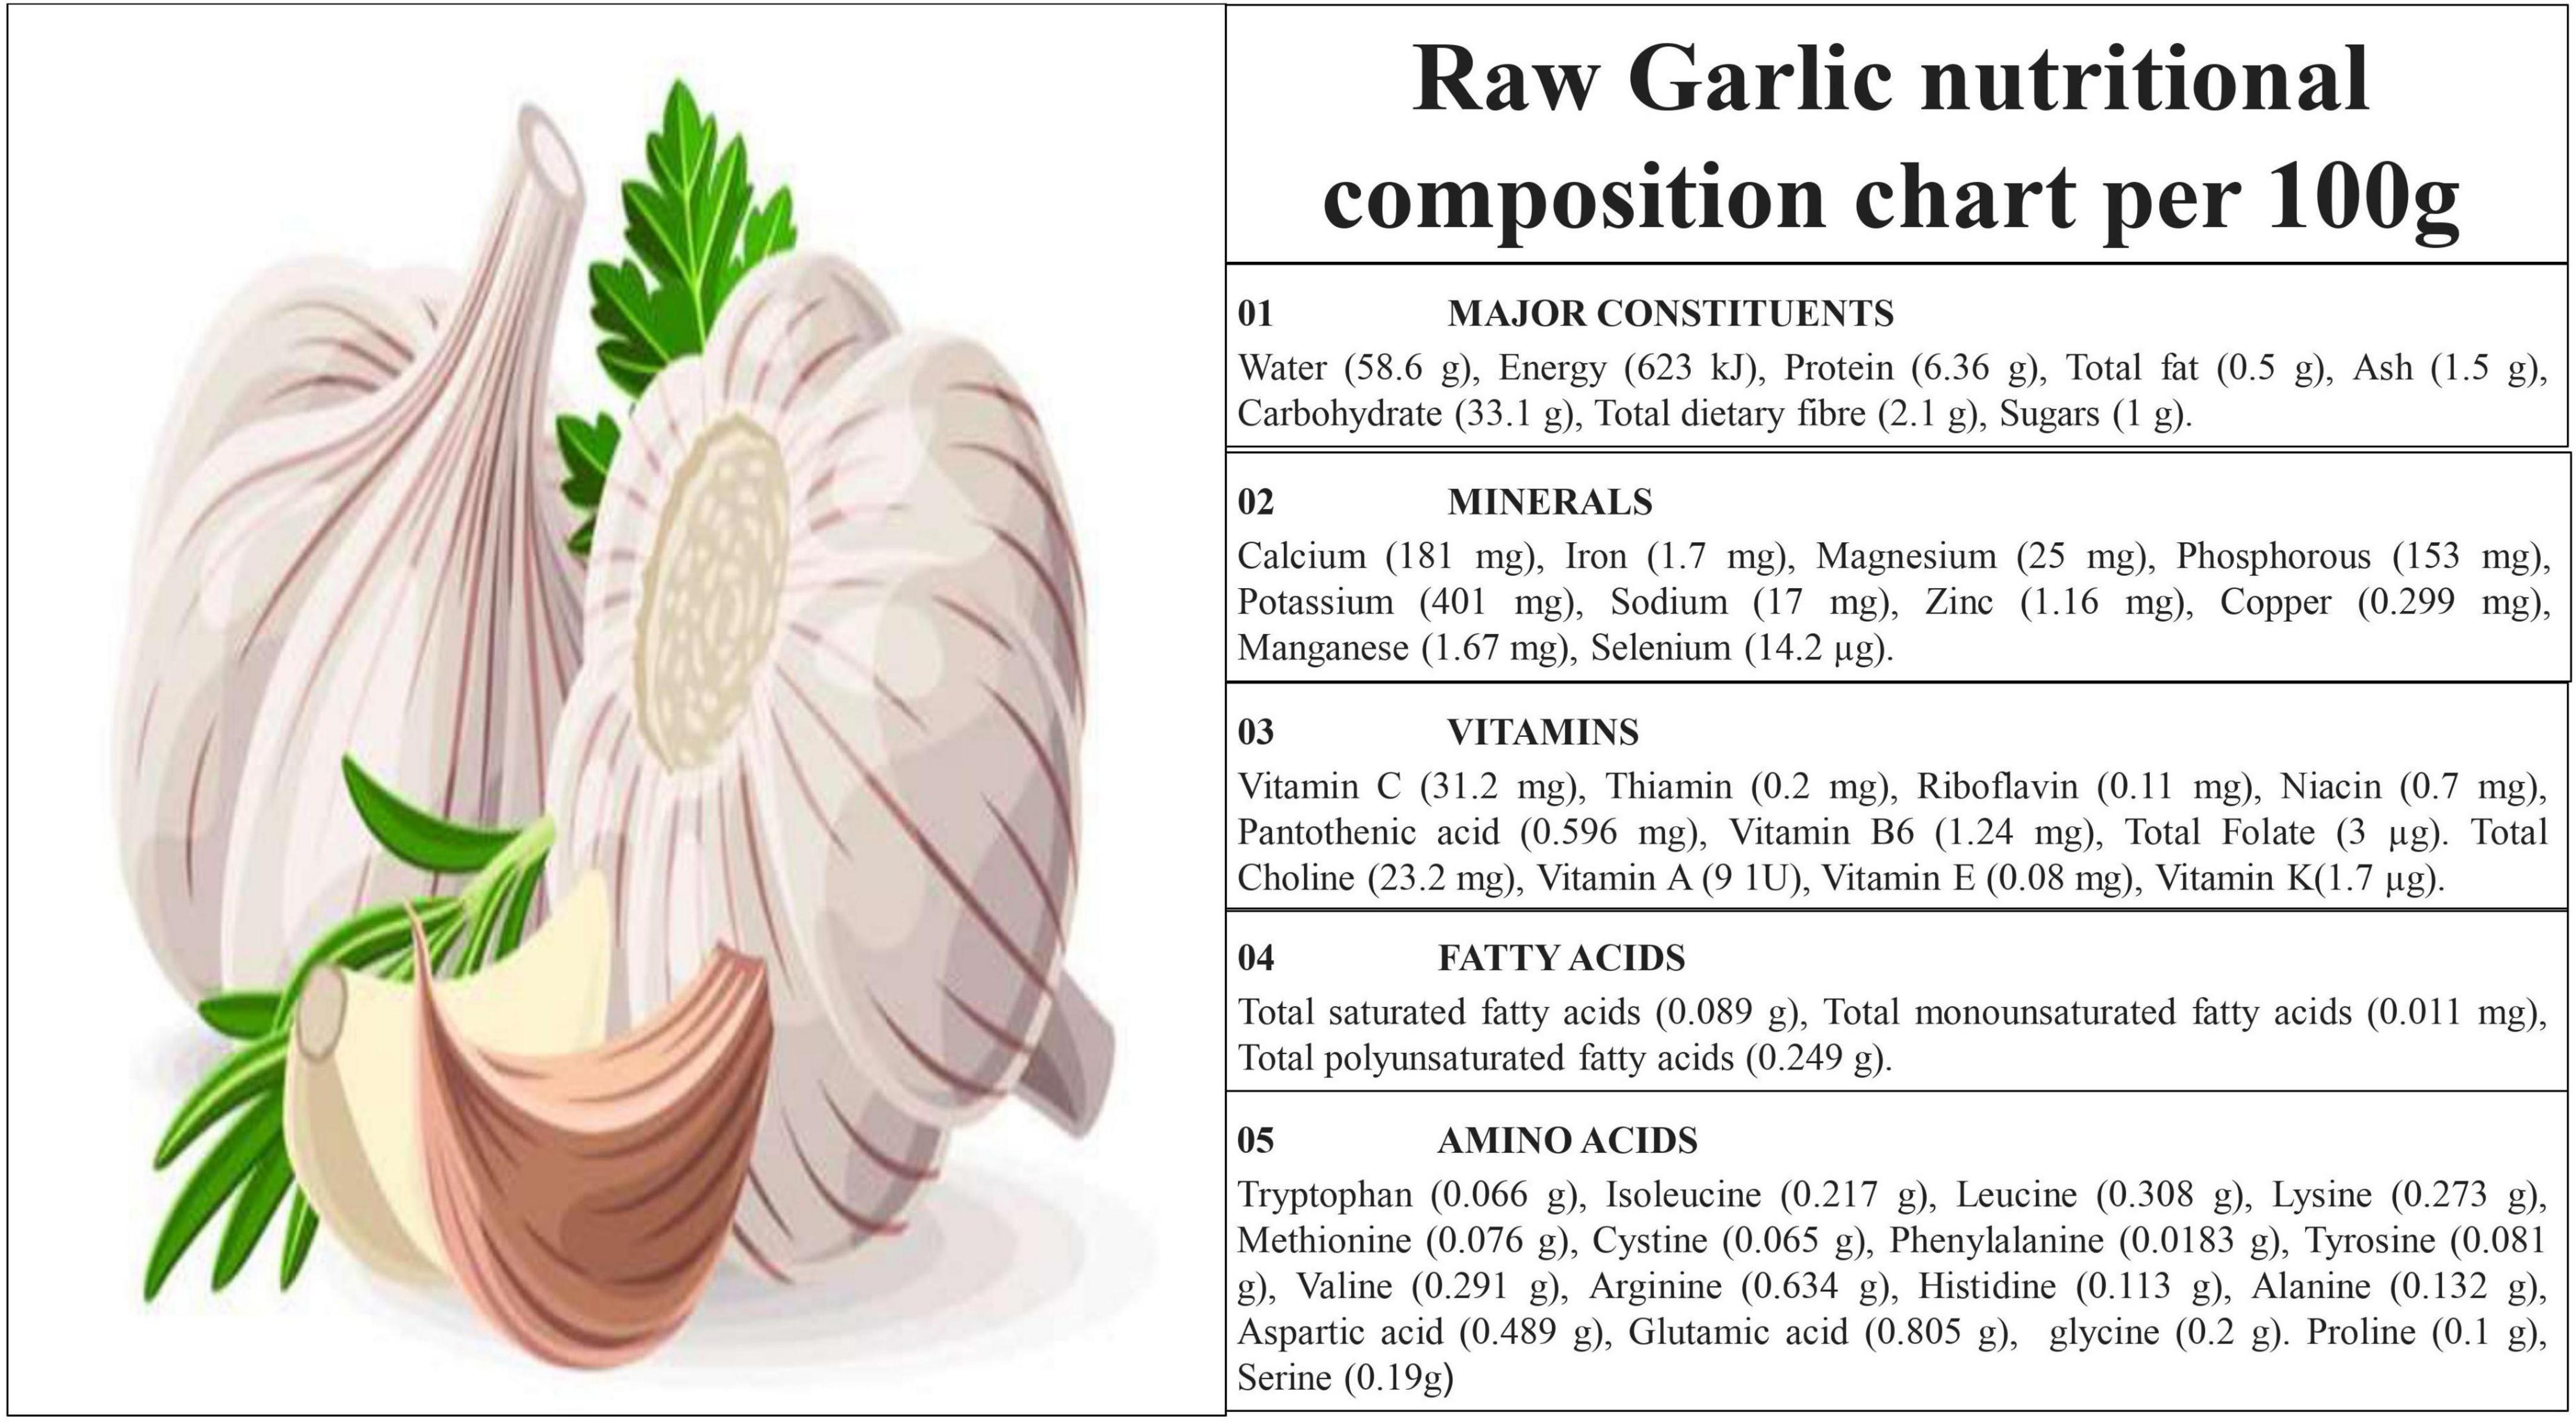 Garlic for anti-inflammatory effects